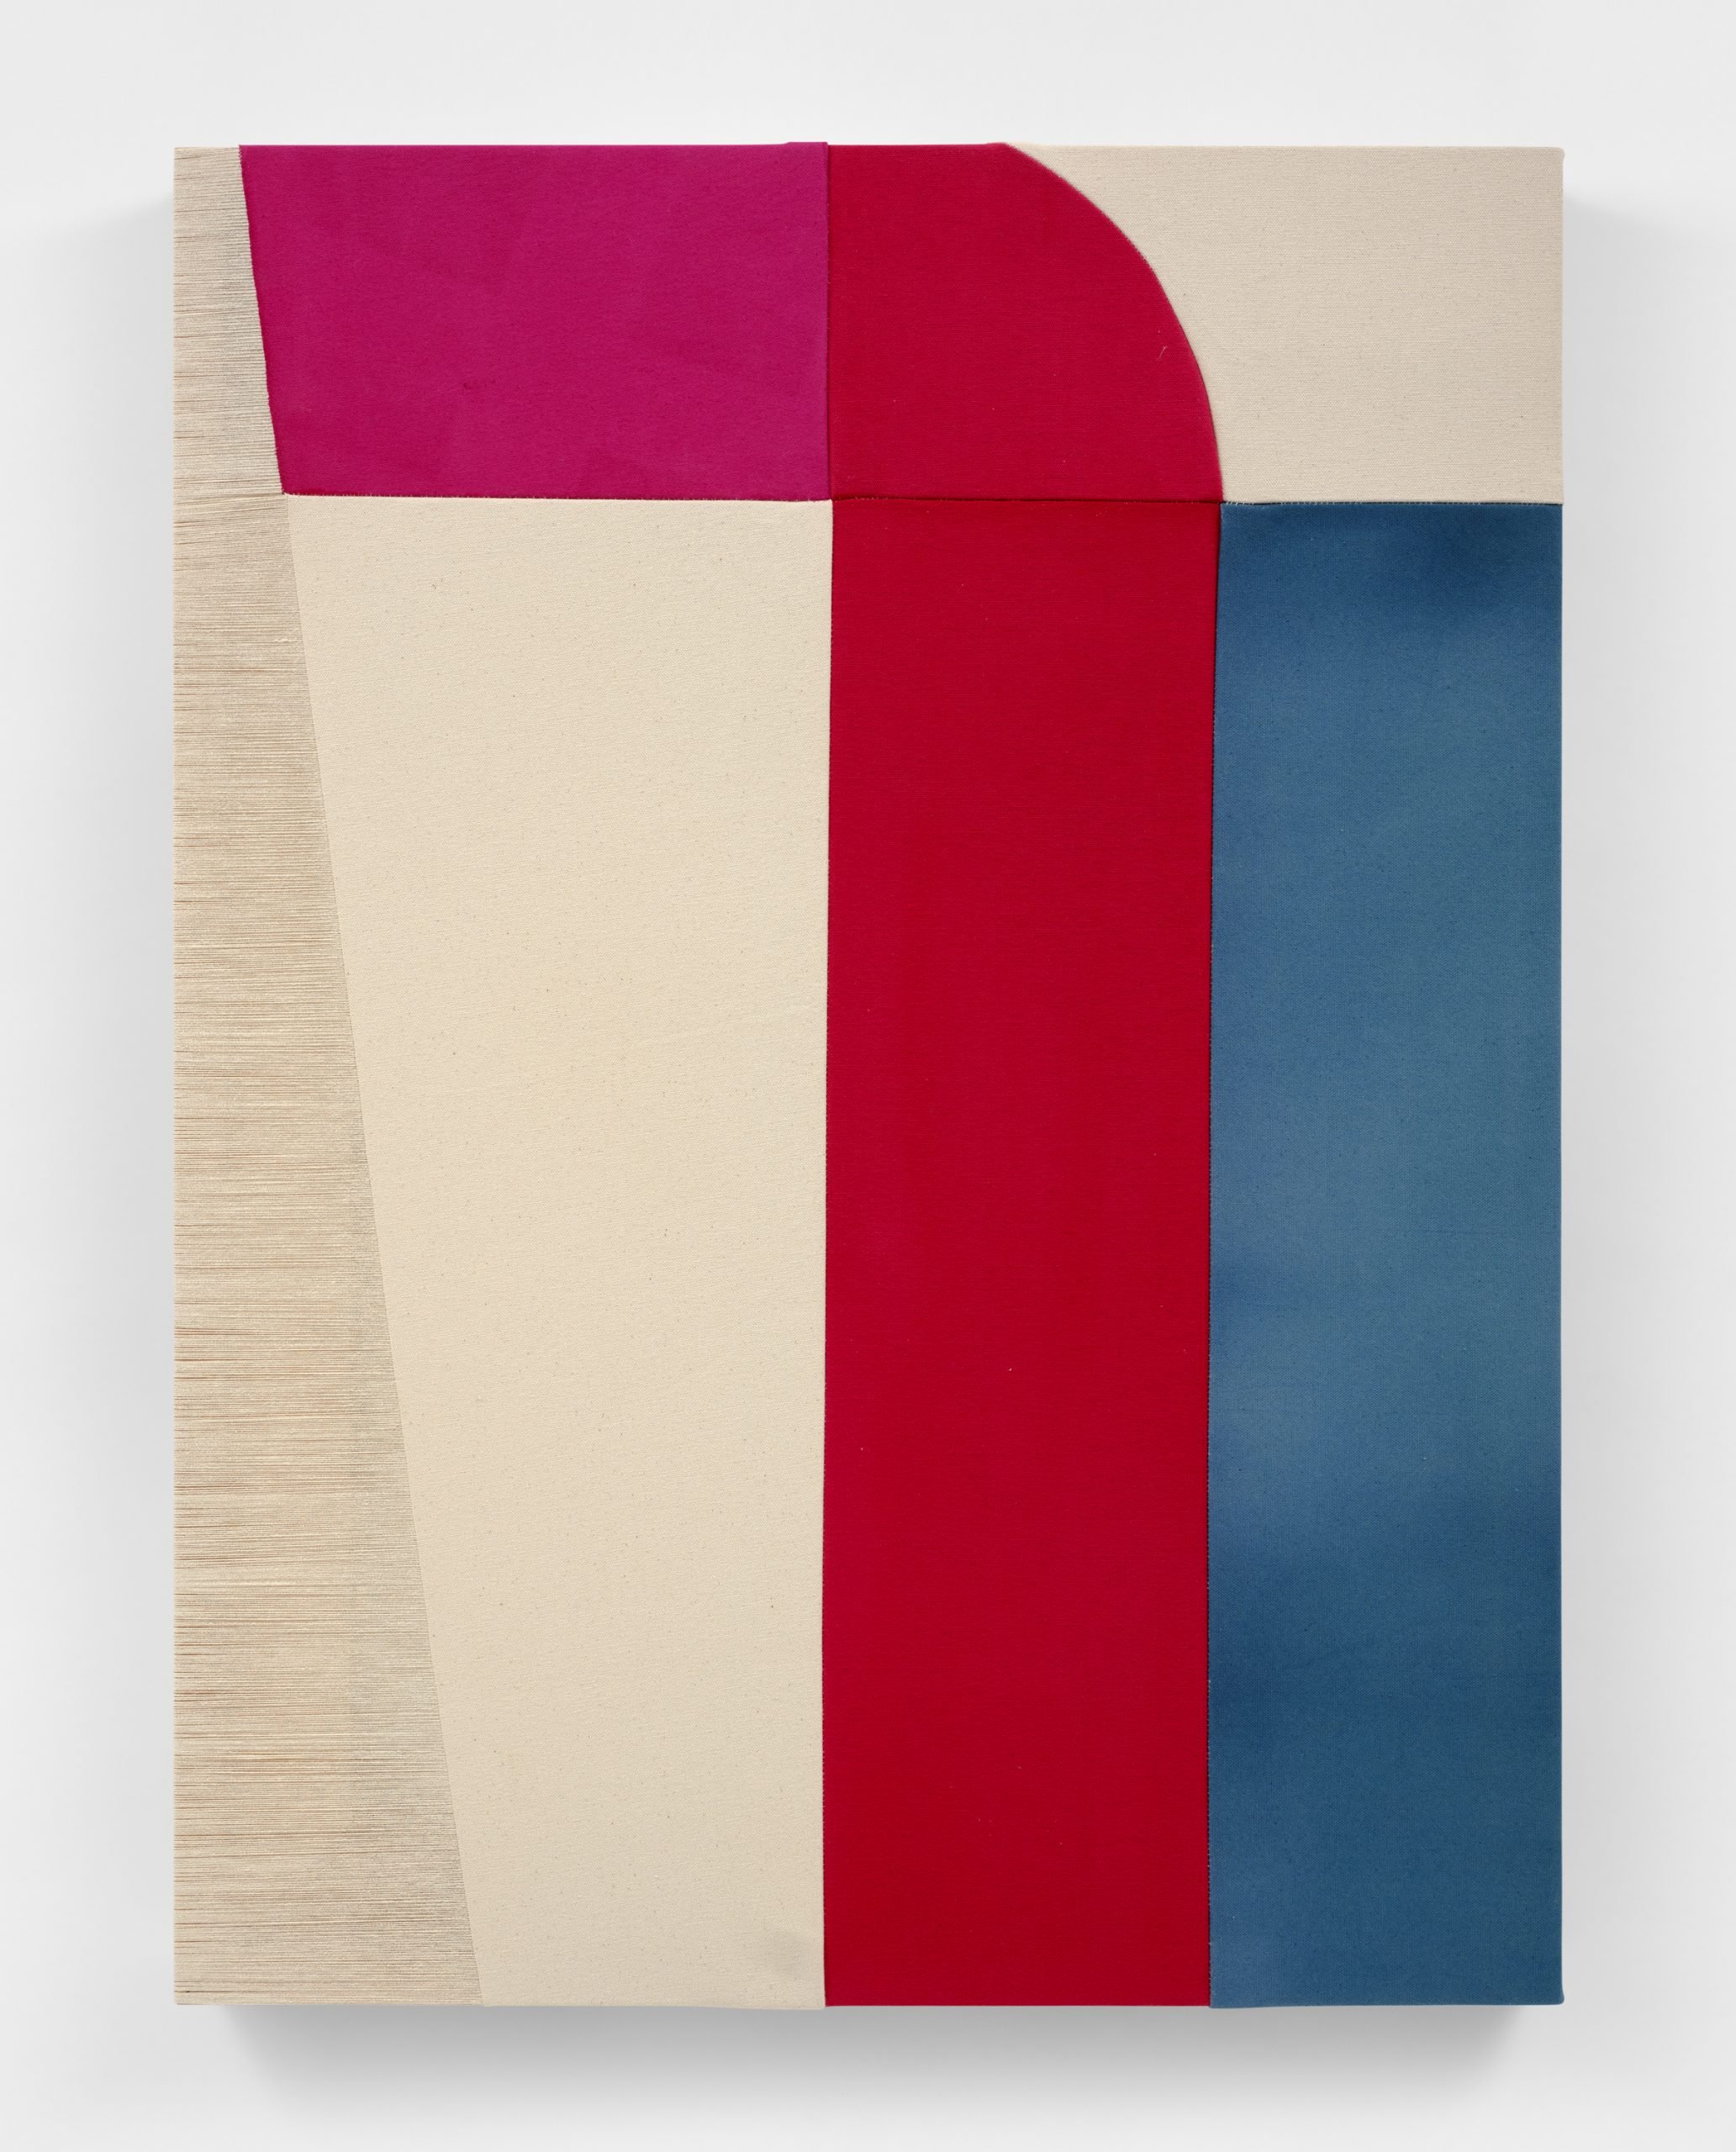 Rebecca Ward, hose, 2021, acrylic and dye on stitched canvas, 32 x 24 in, 81.3 x 61 cm, (RWa302561)